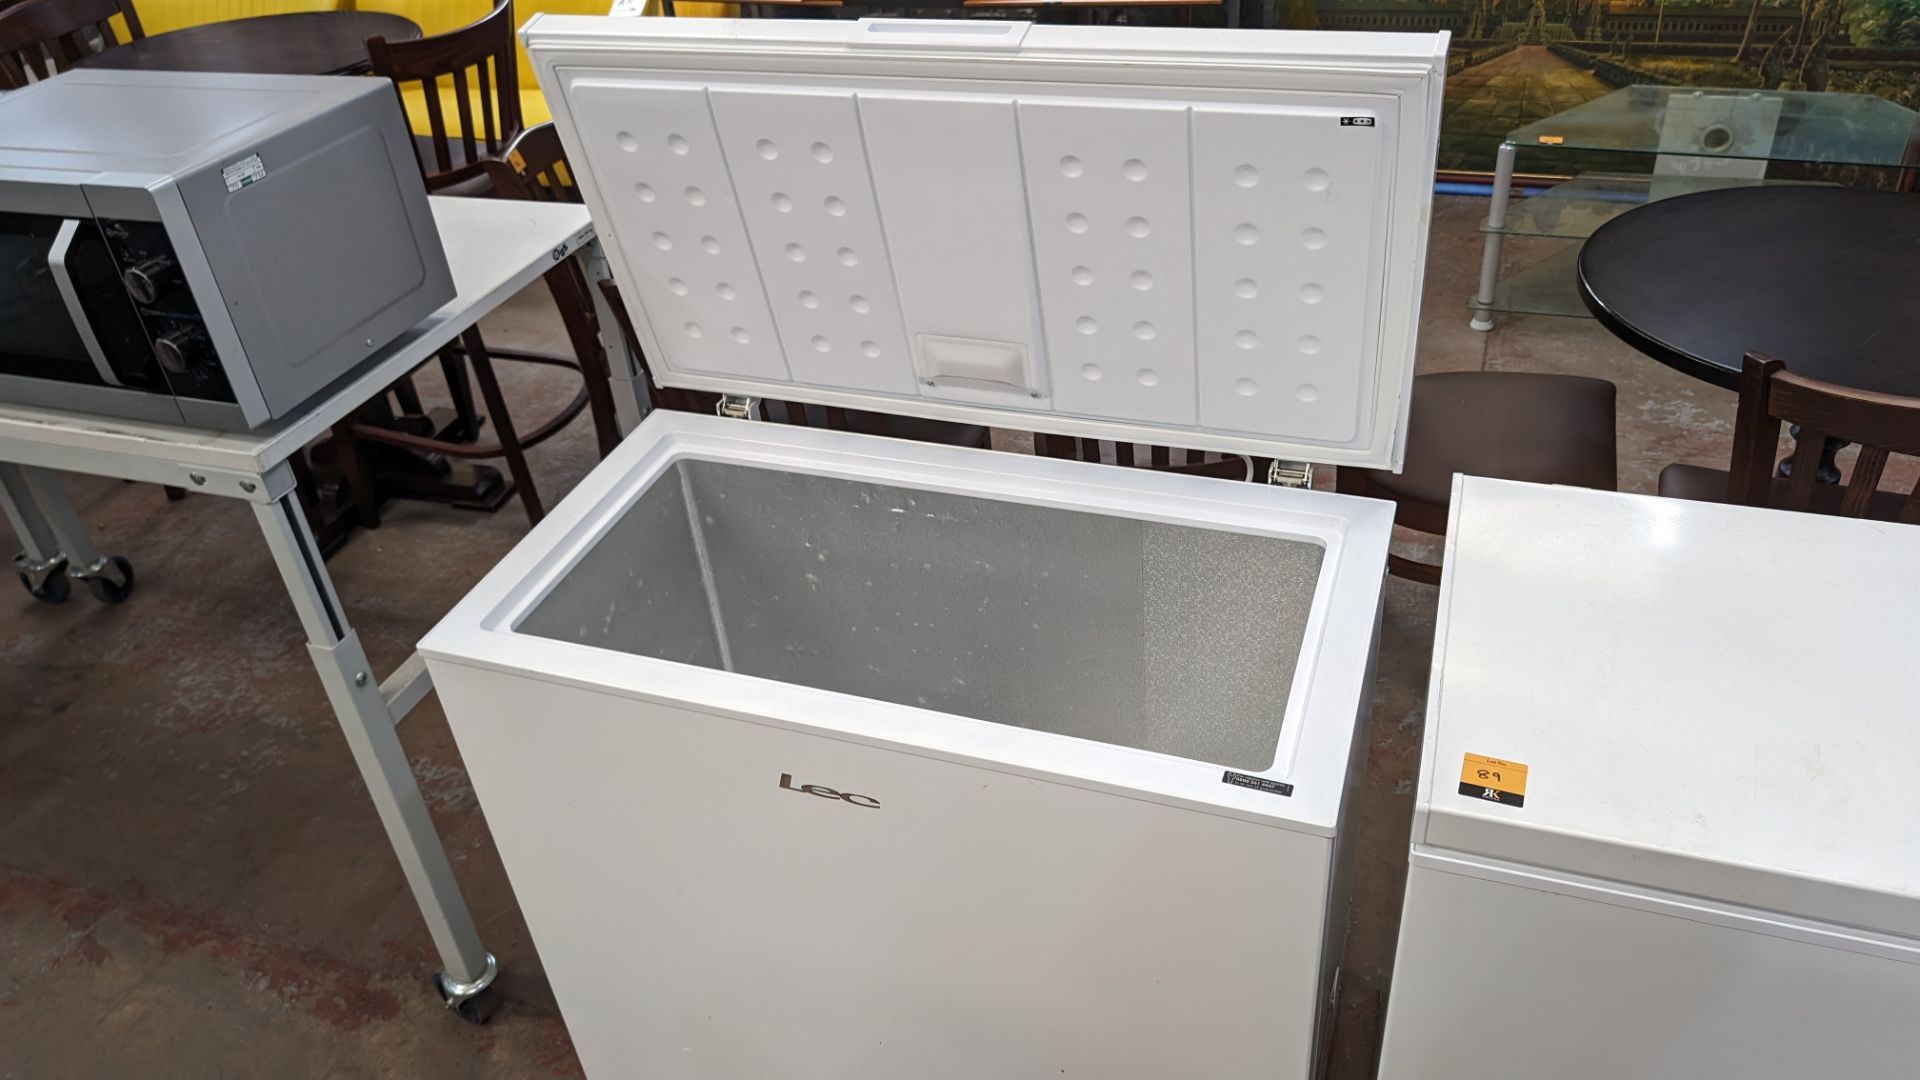 LEC electronic control chest freezer, measuring approximately 950mm long - Bild 4 aus 5